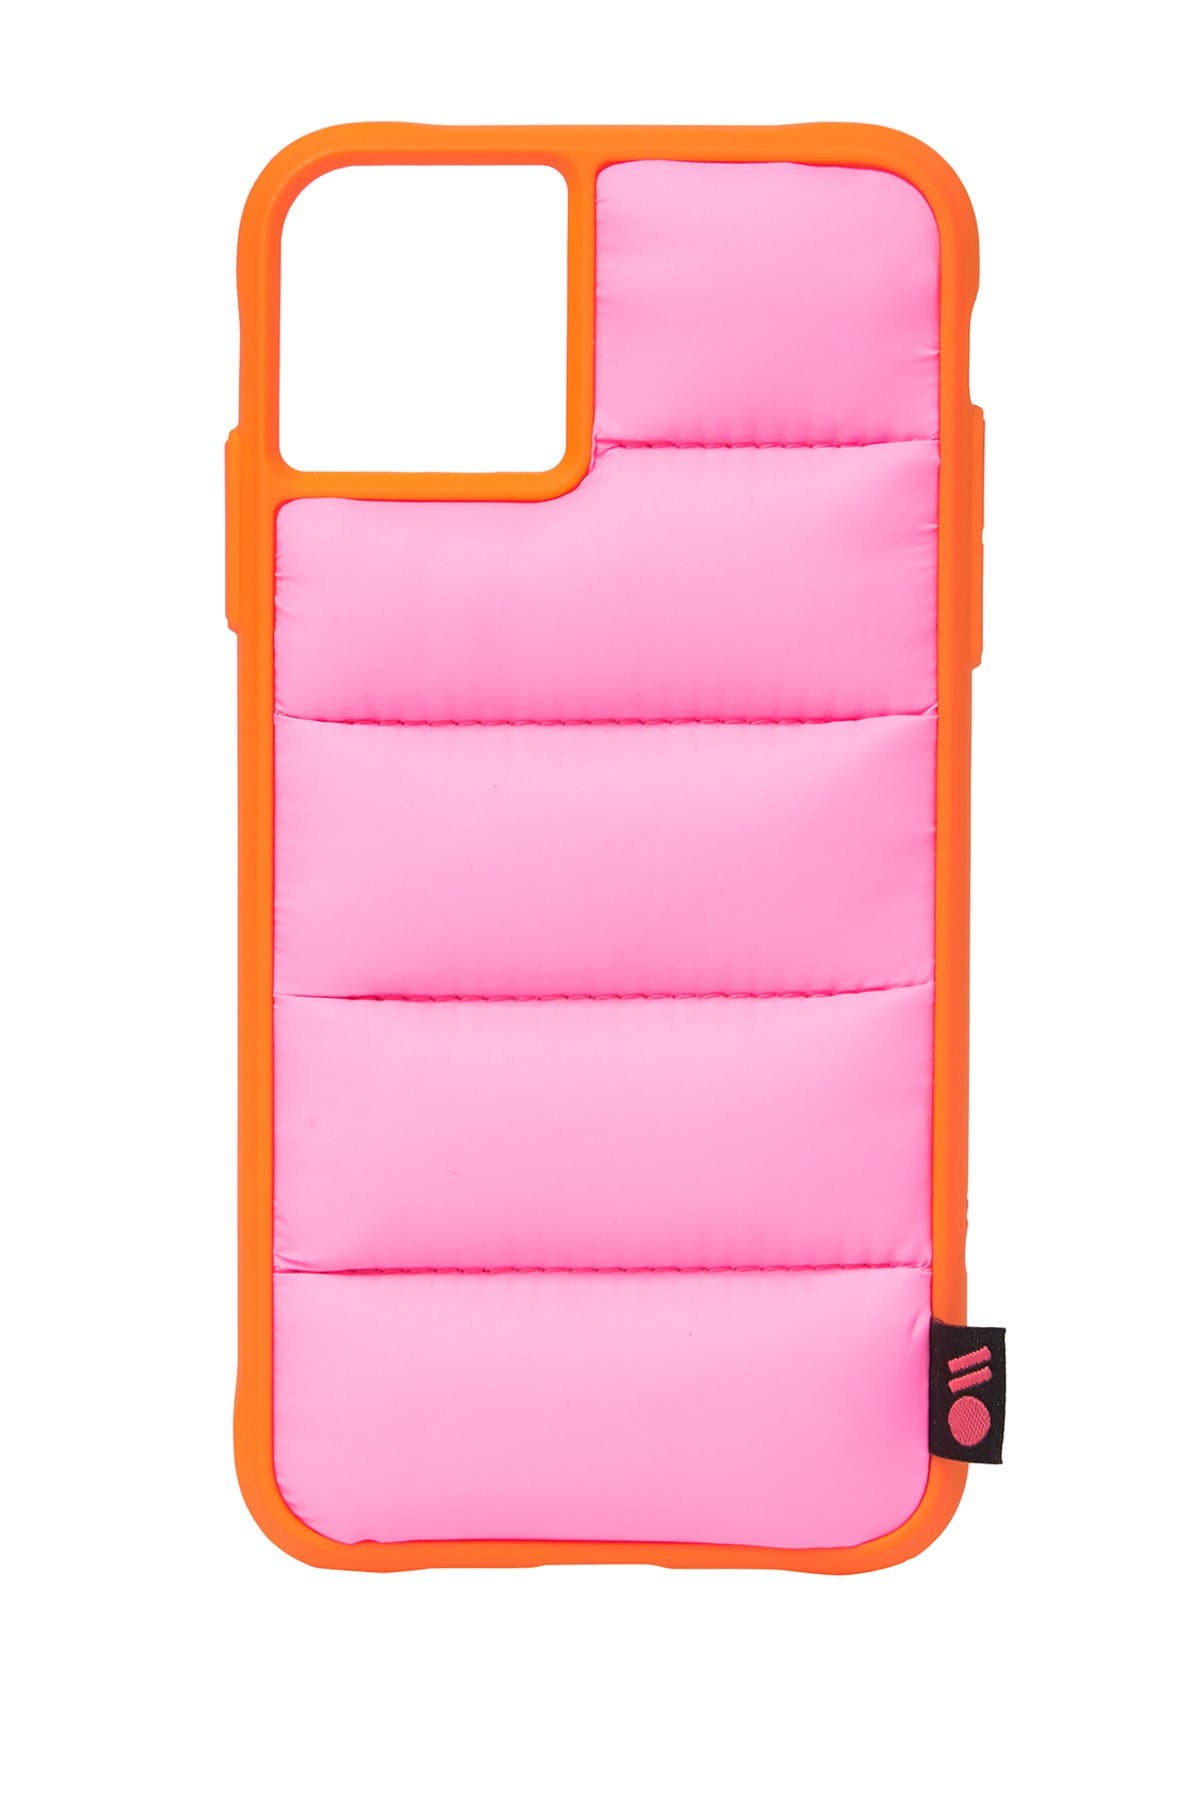 Case-mate Iphone 11 Pro Max/xs Max Puffer Phone Case In Pink